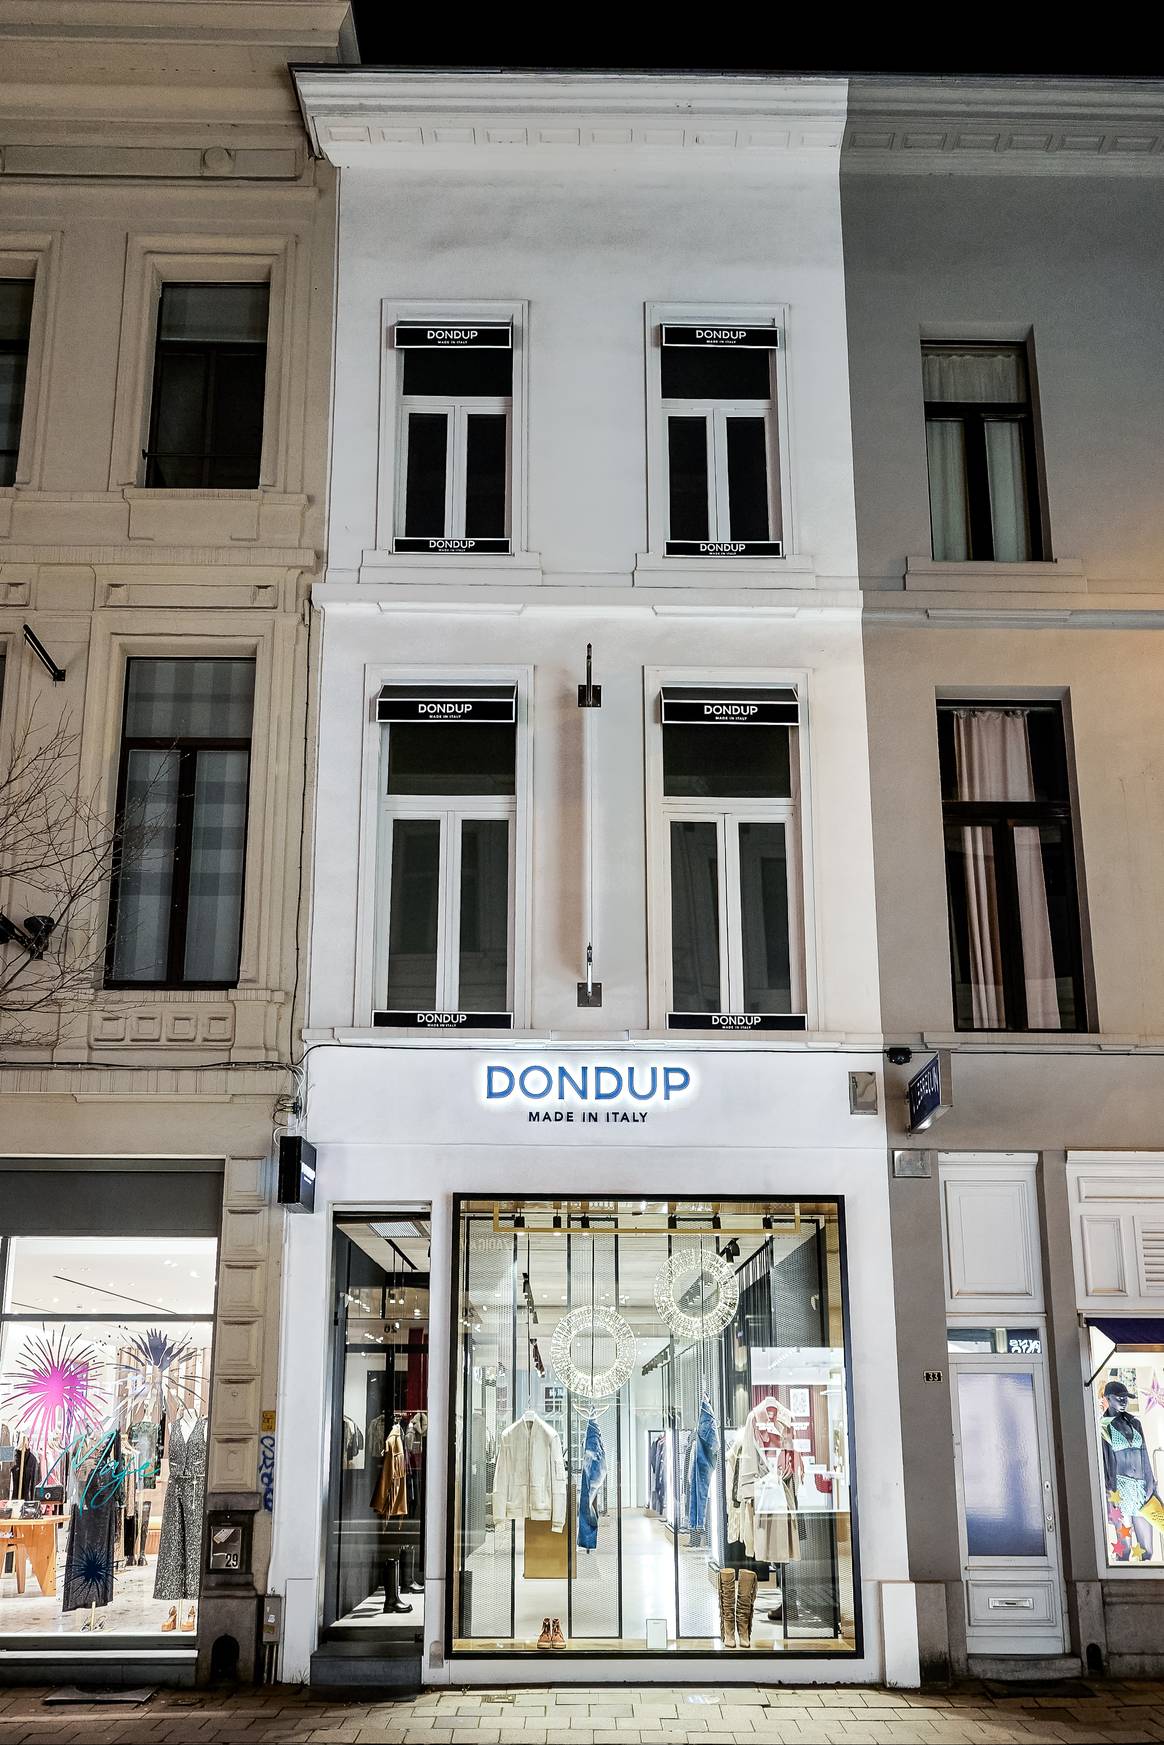 De Dondup winkel in Antwerpen. Beeld via Dondup / Fashion Club 70